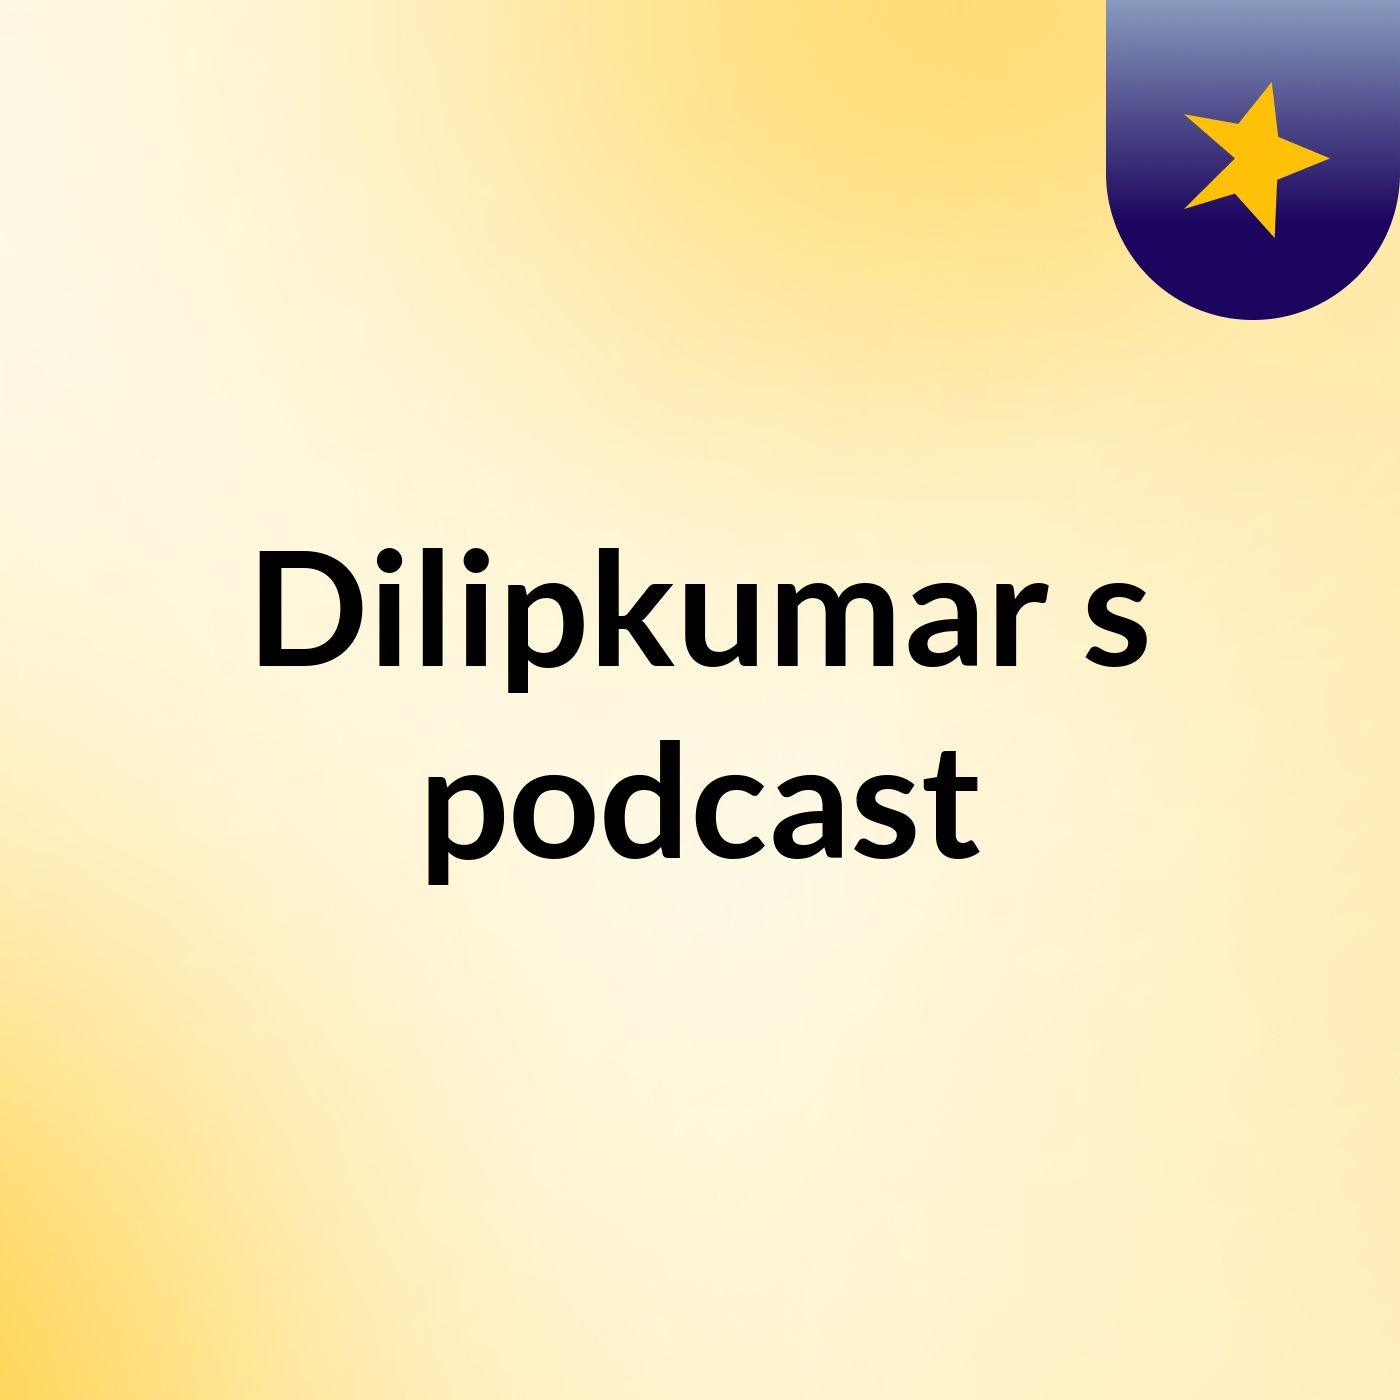 Dilipkumar's podcast